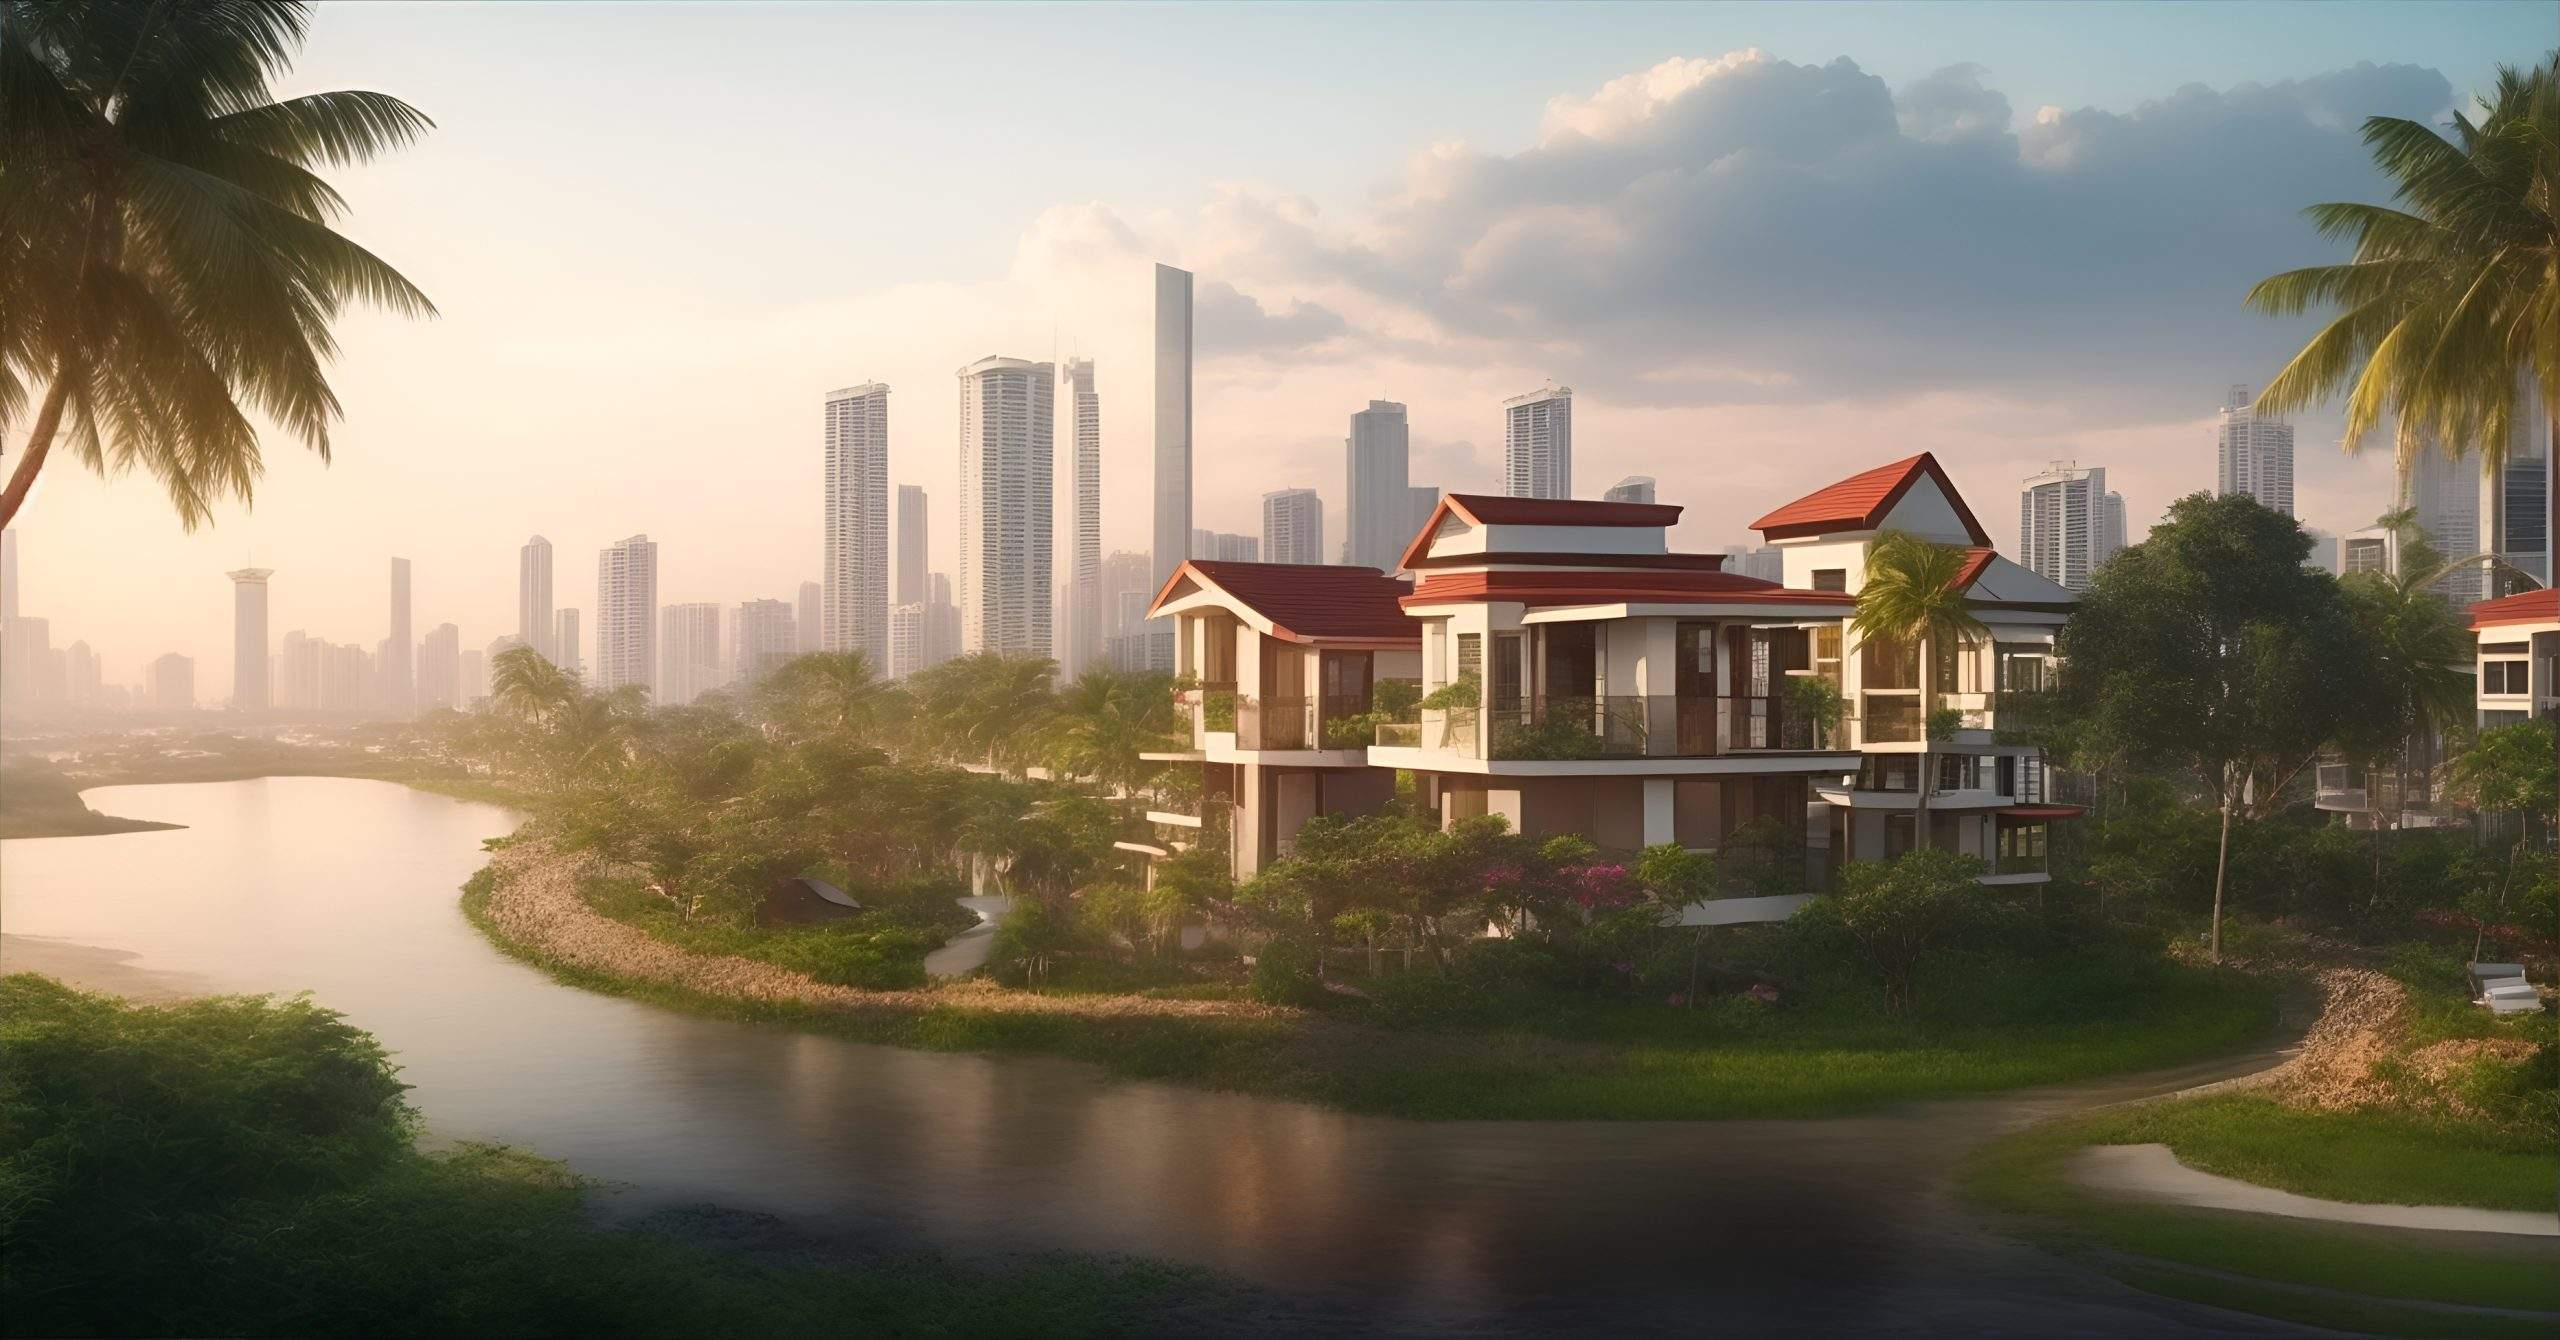 OFW Real Estate Philippines: Navigating Real Estate Market